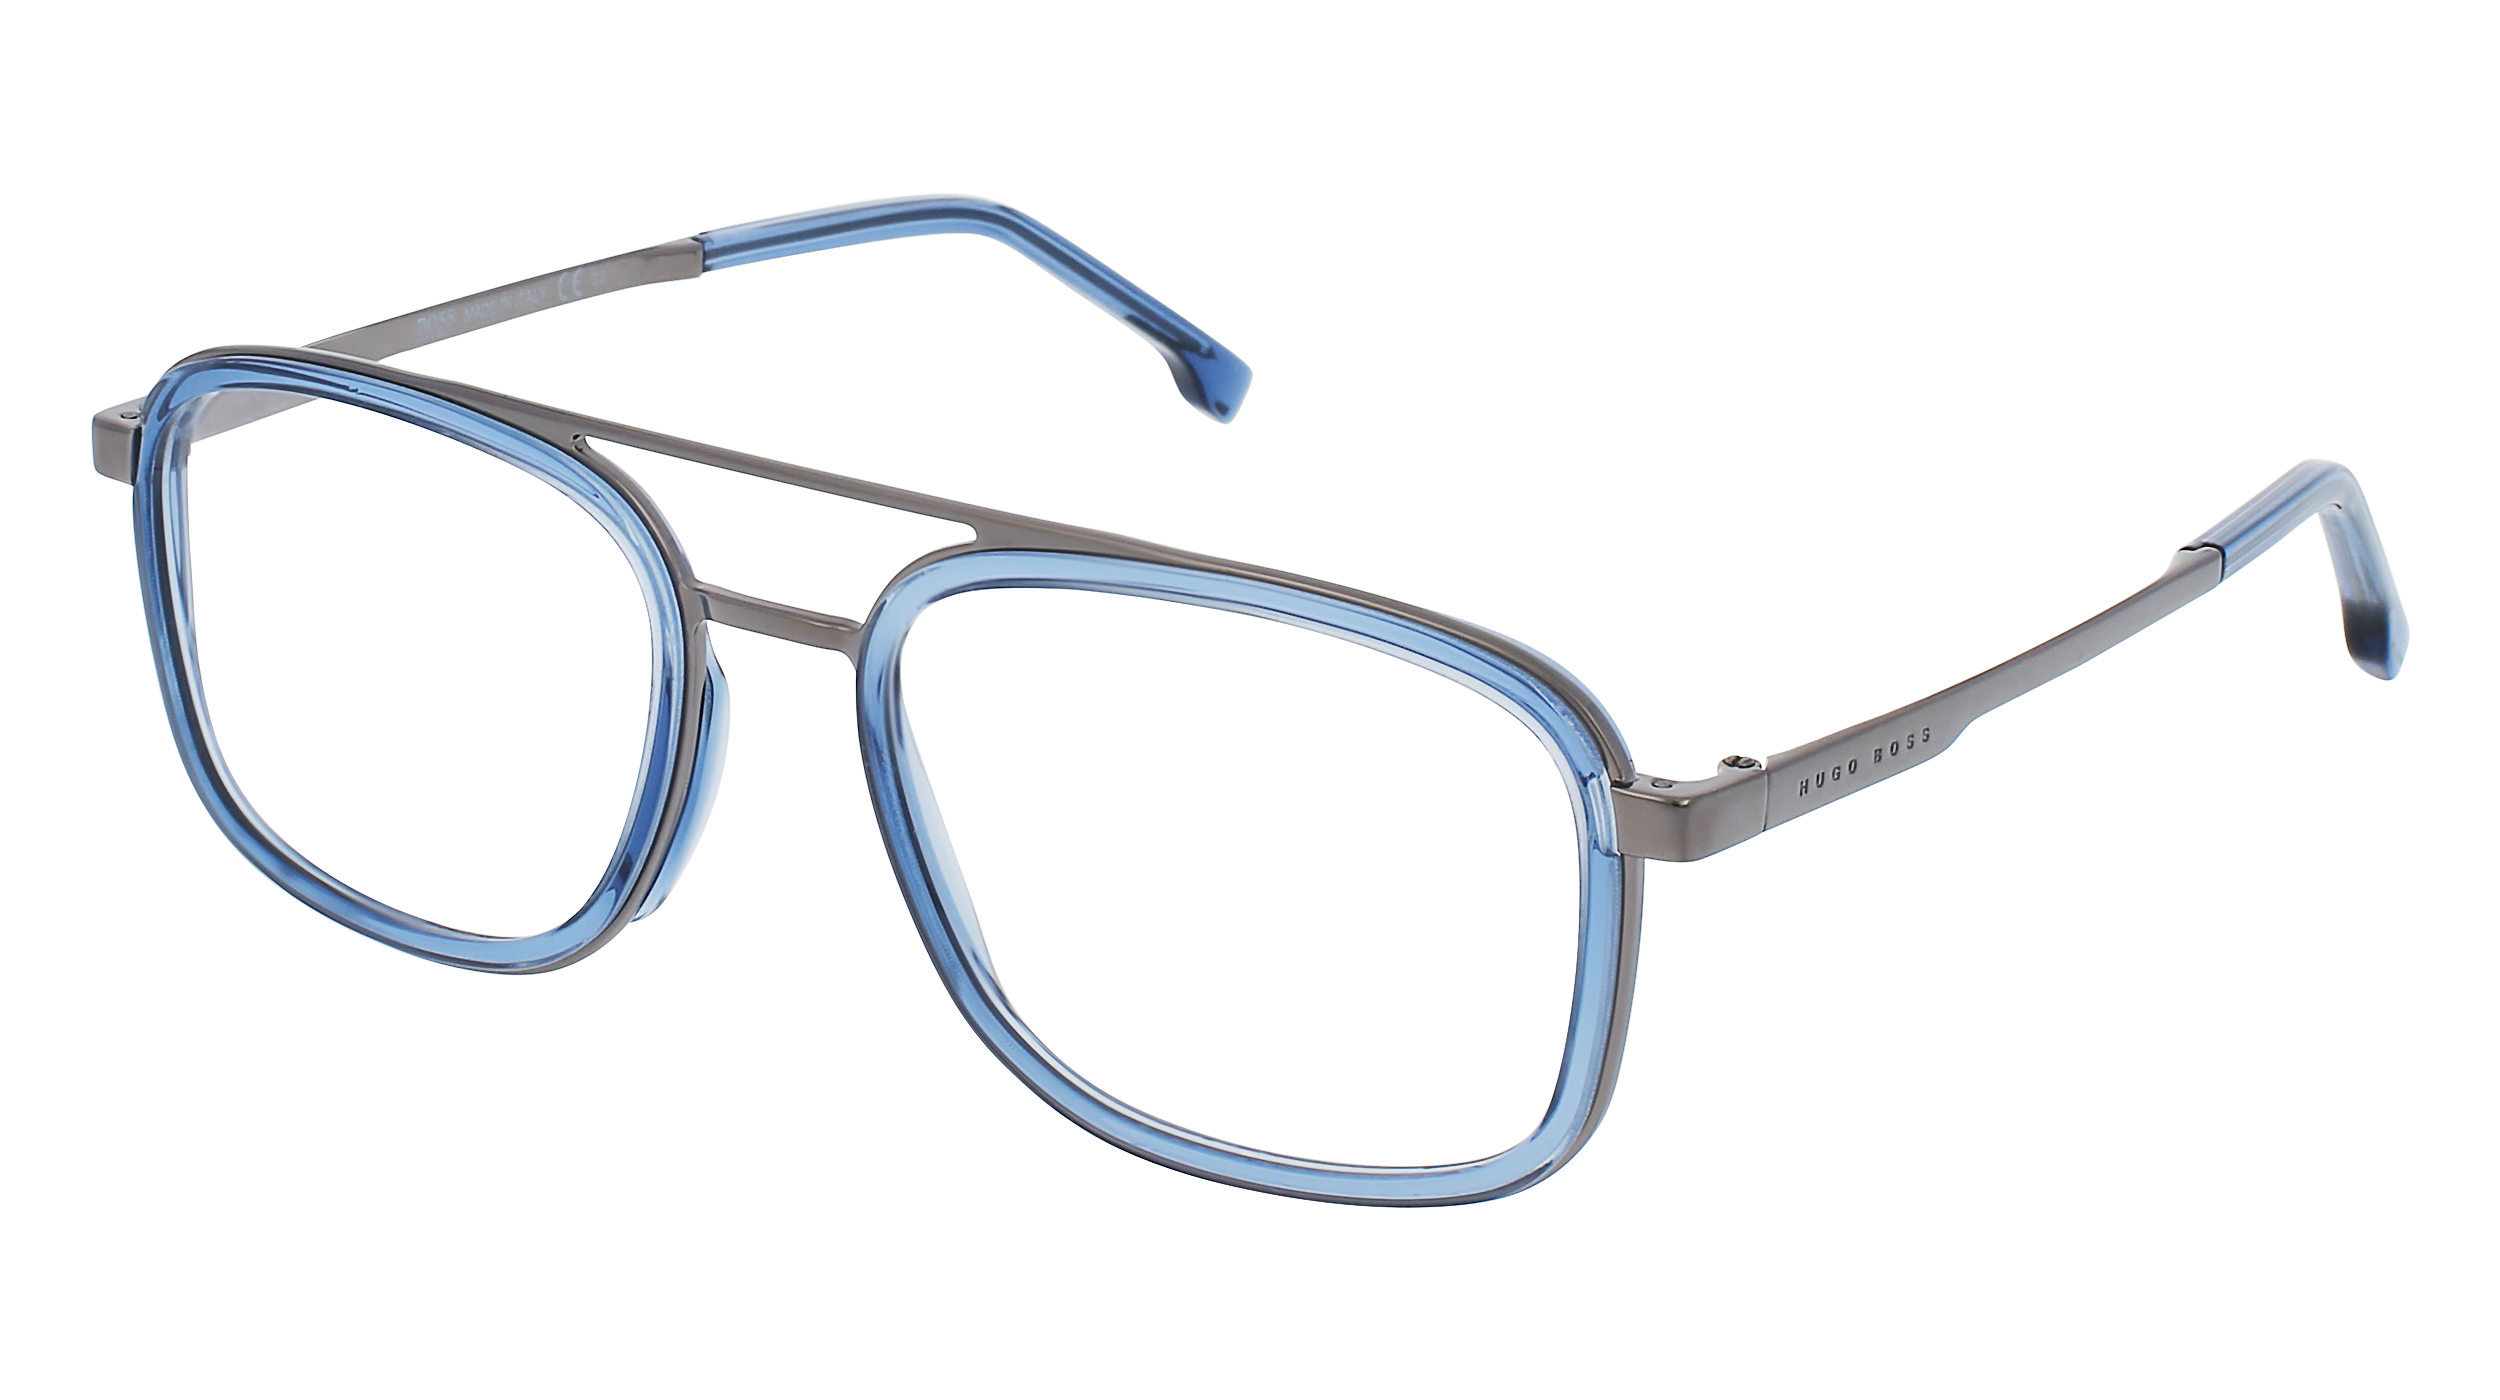 Hugo Boss 1255 5UV Glasses Frames Ausralia | 1001 Optical